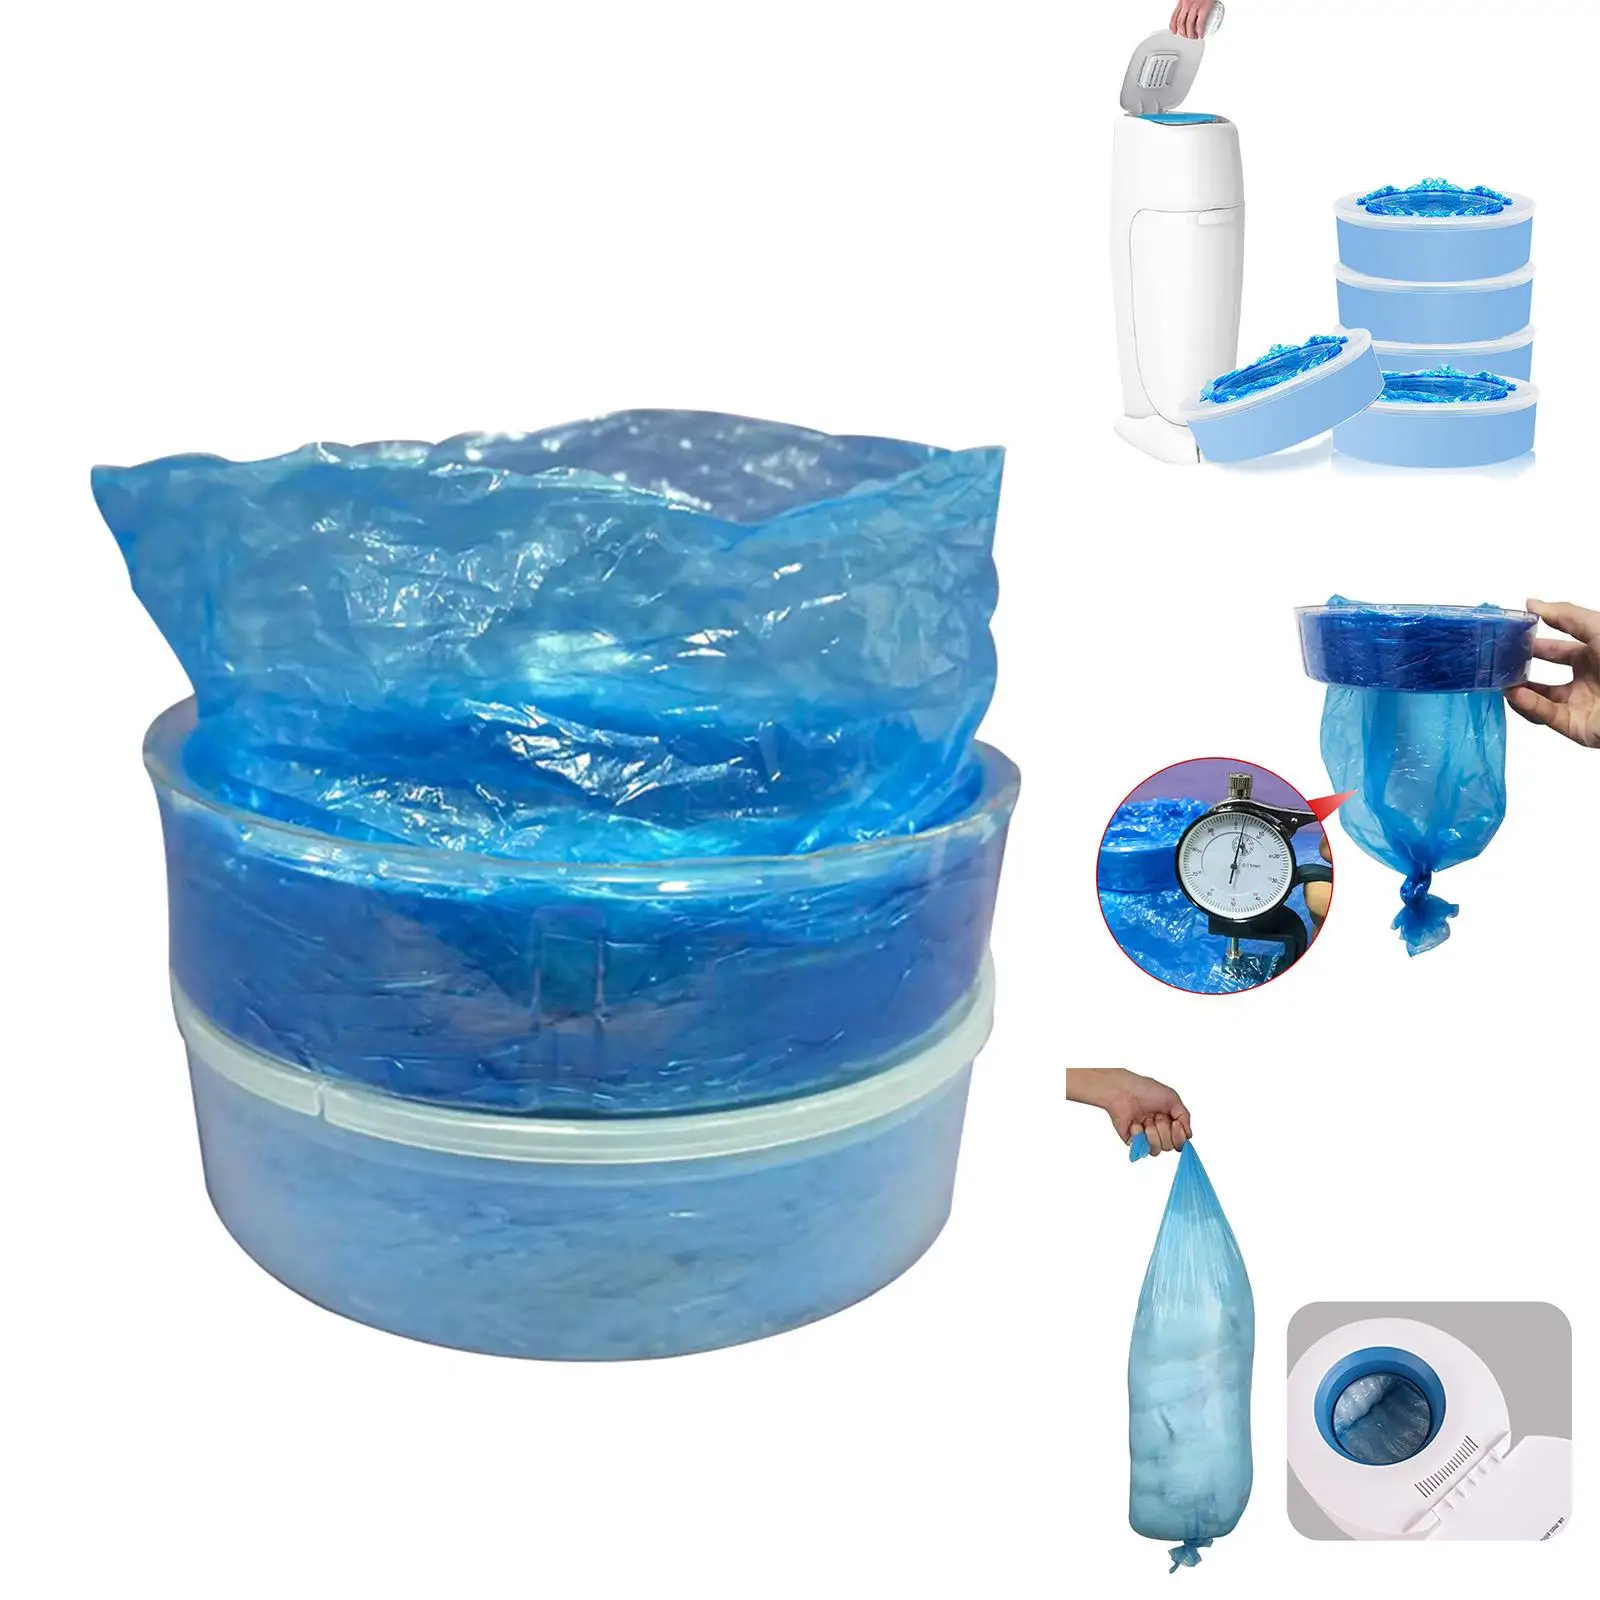 Diaper Bags Disposable Portable Rubbish Bags Waste Bag Clean up Diaper Sacks for Walking Diaper Trash Can Bathroom